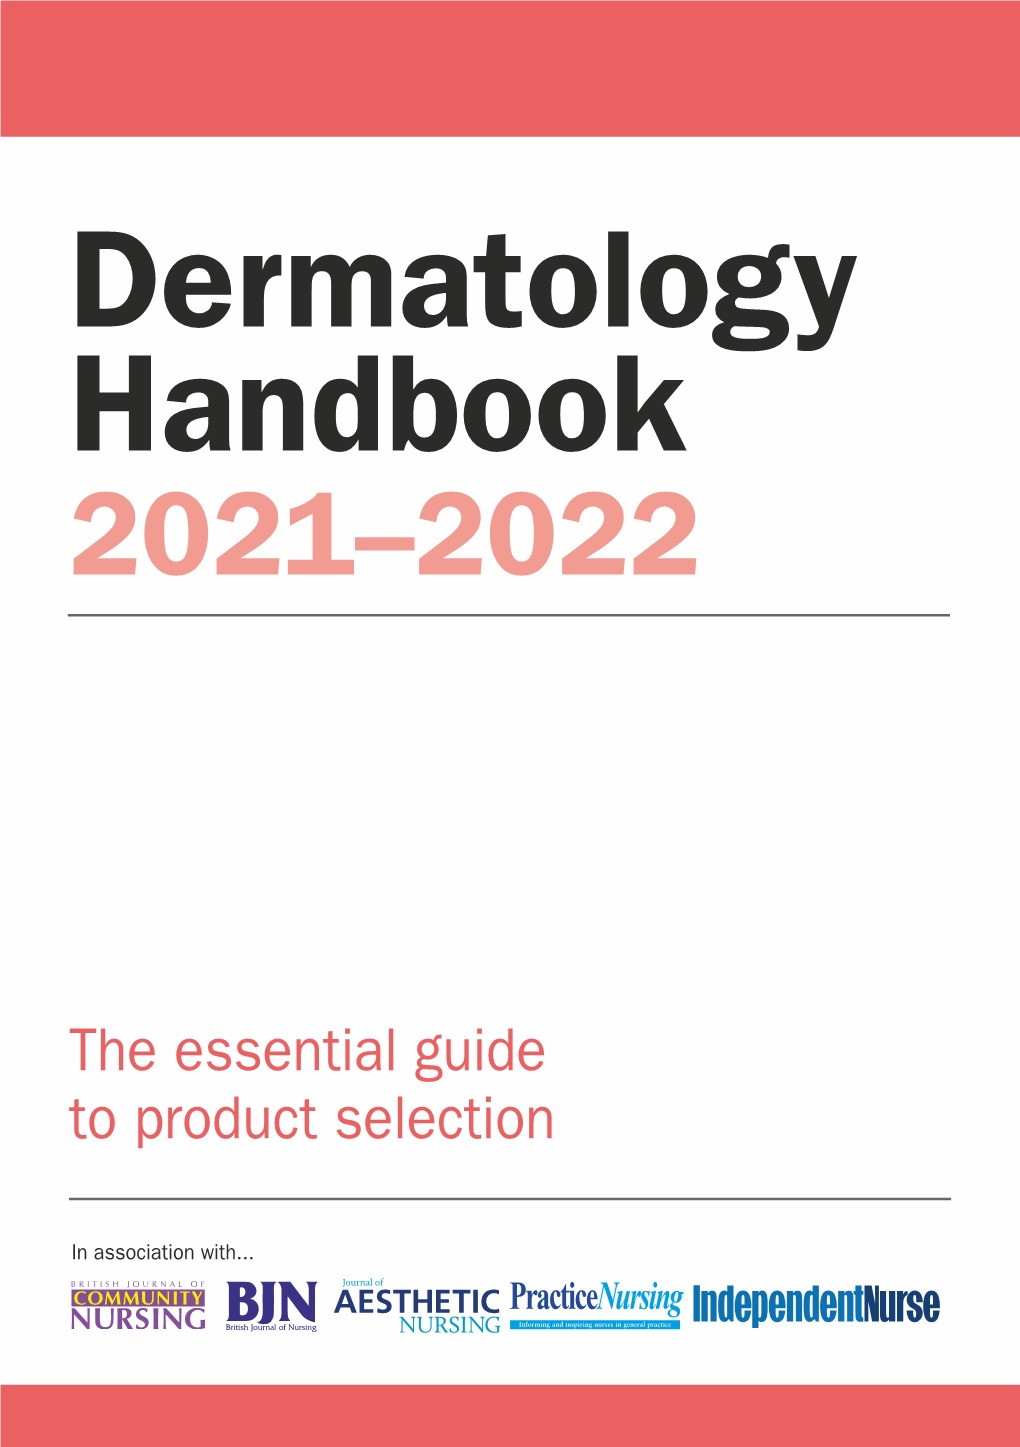 001 Derma Handbook Cover 2021 with SPINE.Indd